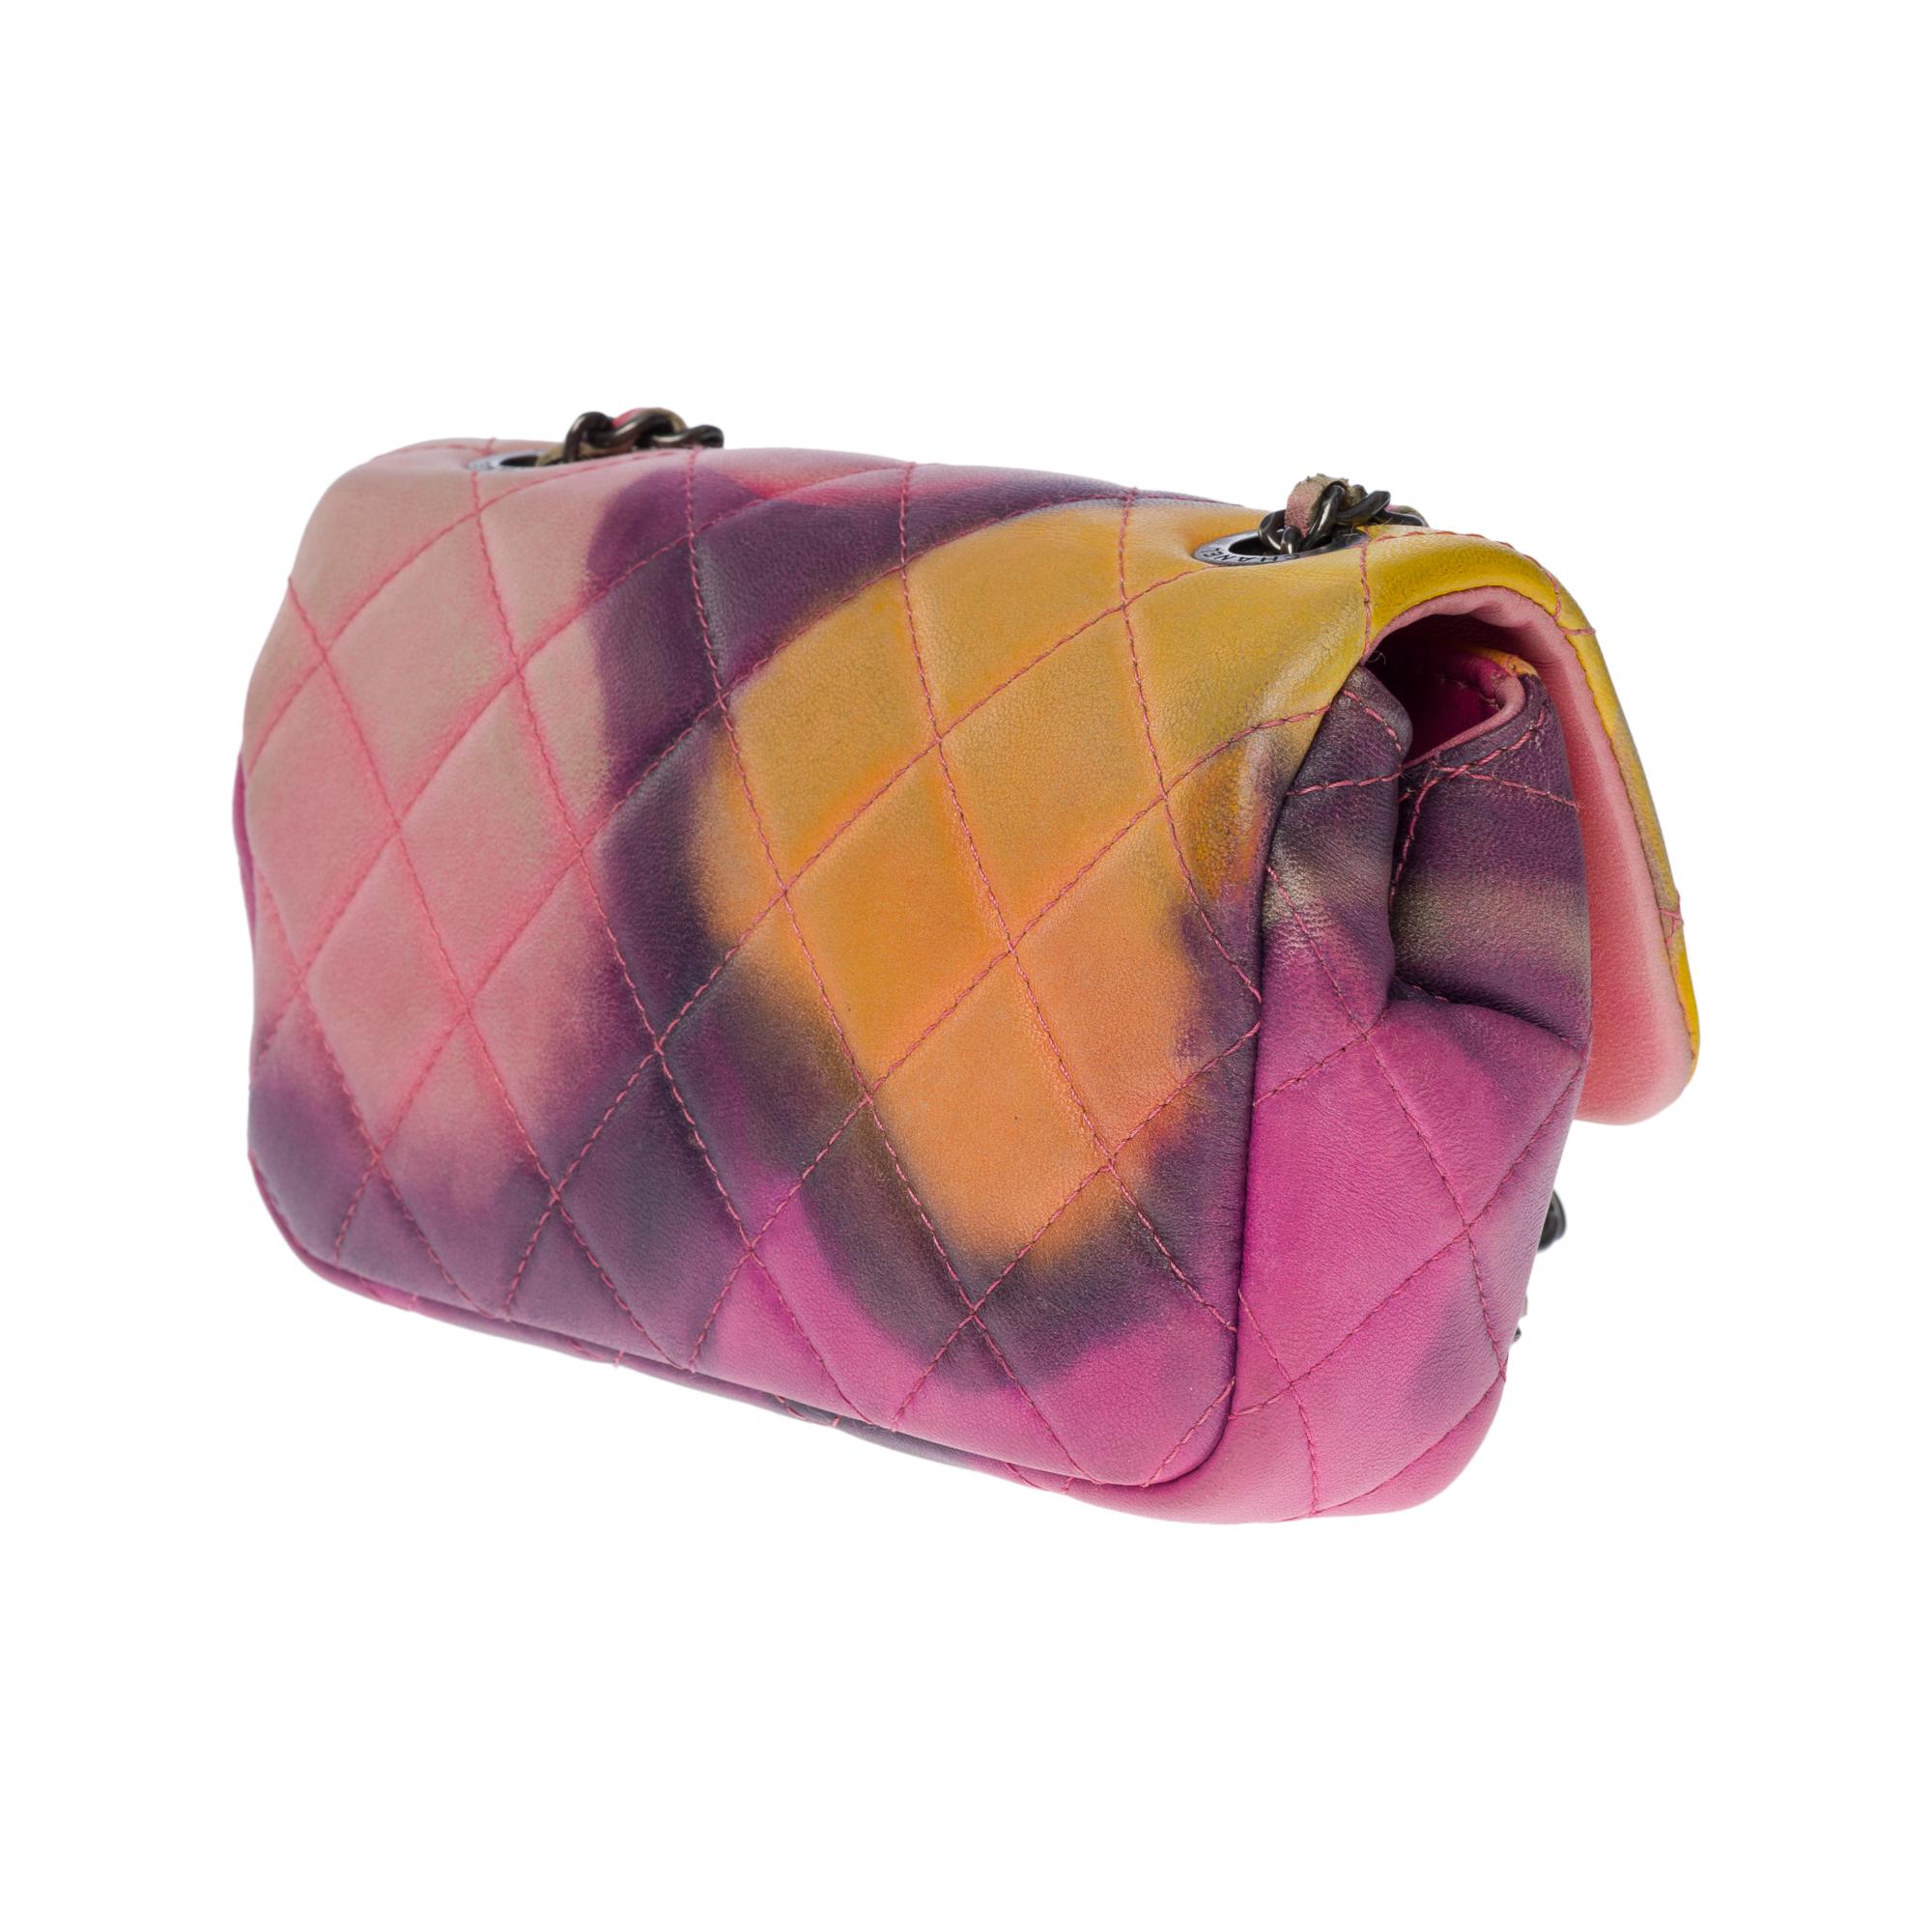 Rare Power Flower Chanel Timeless Mini shoulder bag in multicolor leather, SHW For Sale 1